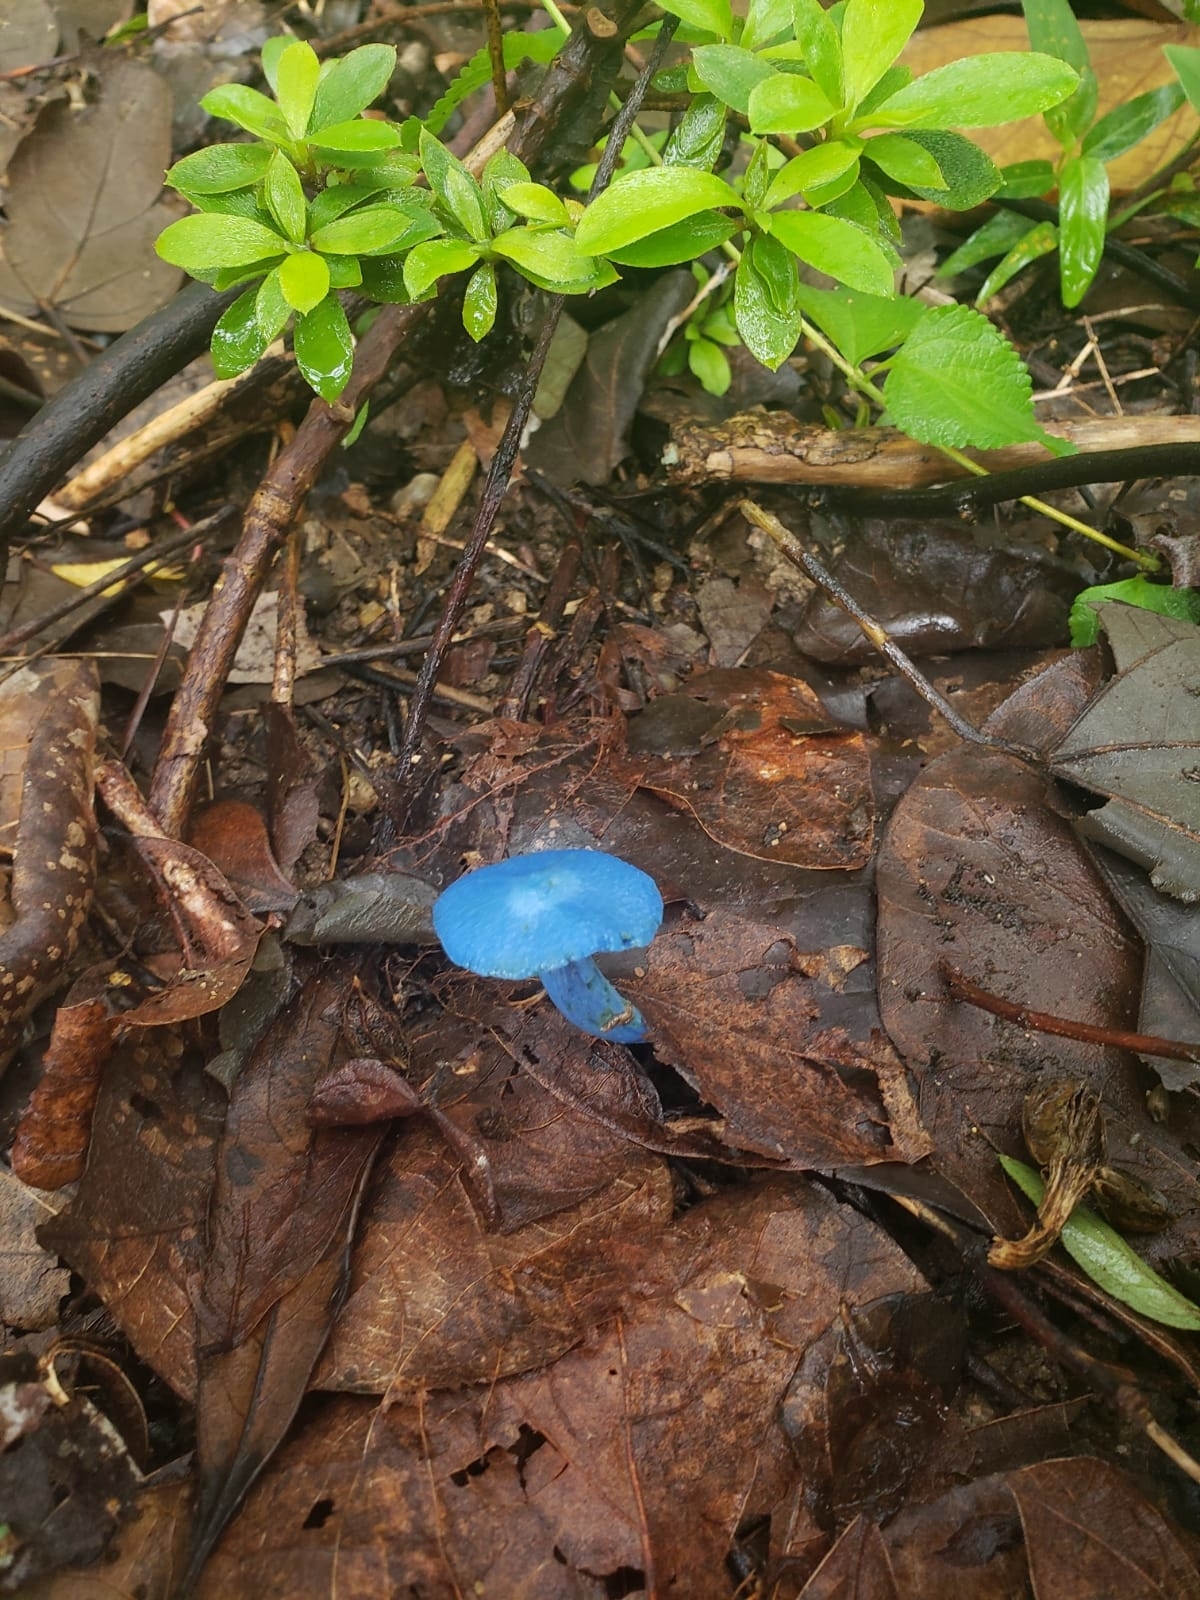 A blue mushroom growing in the soil